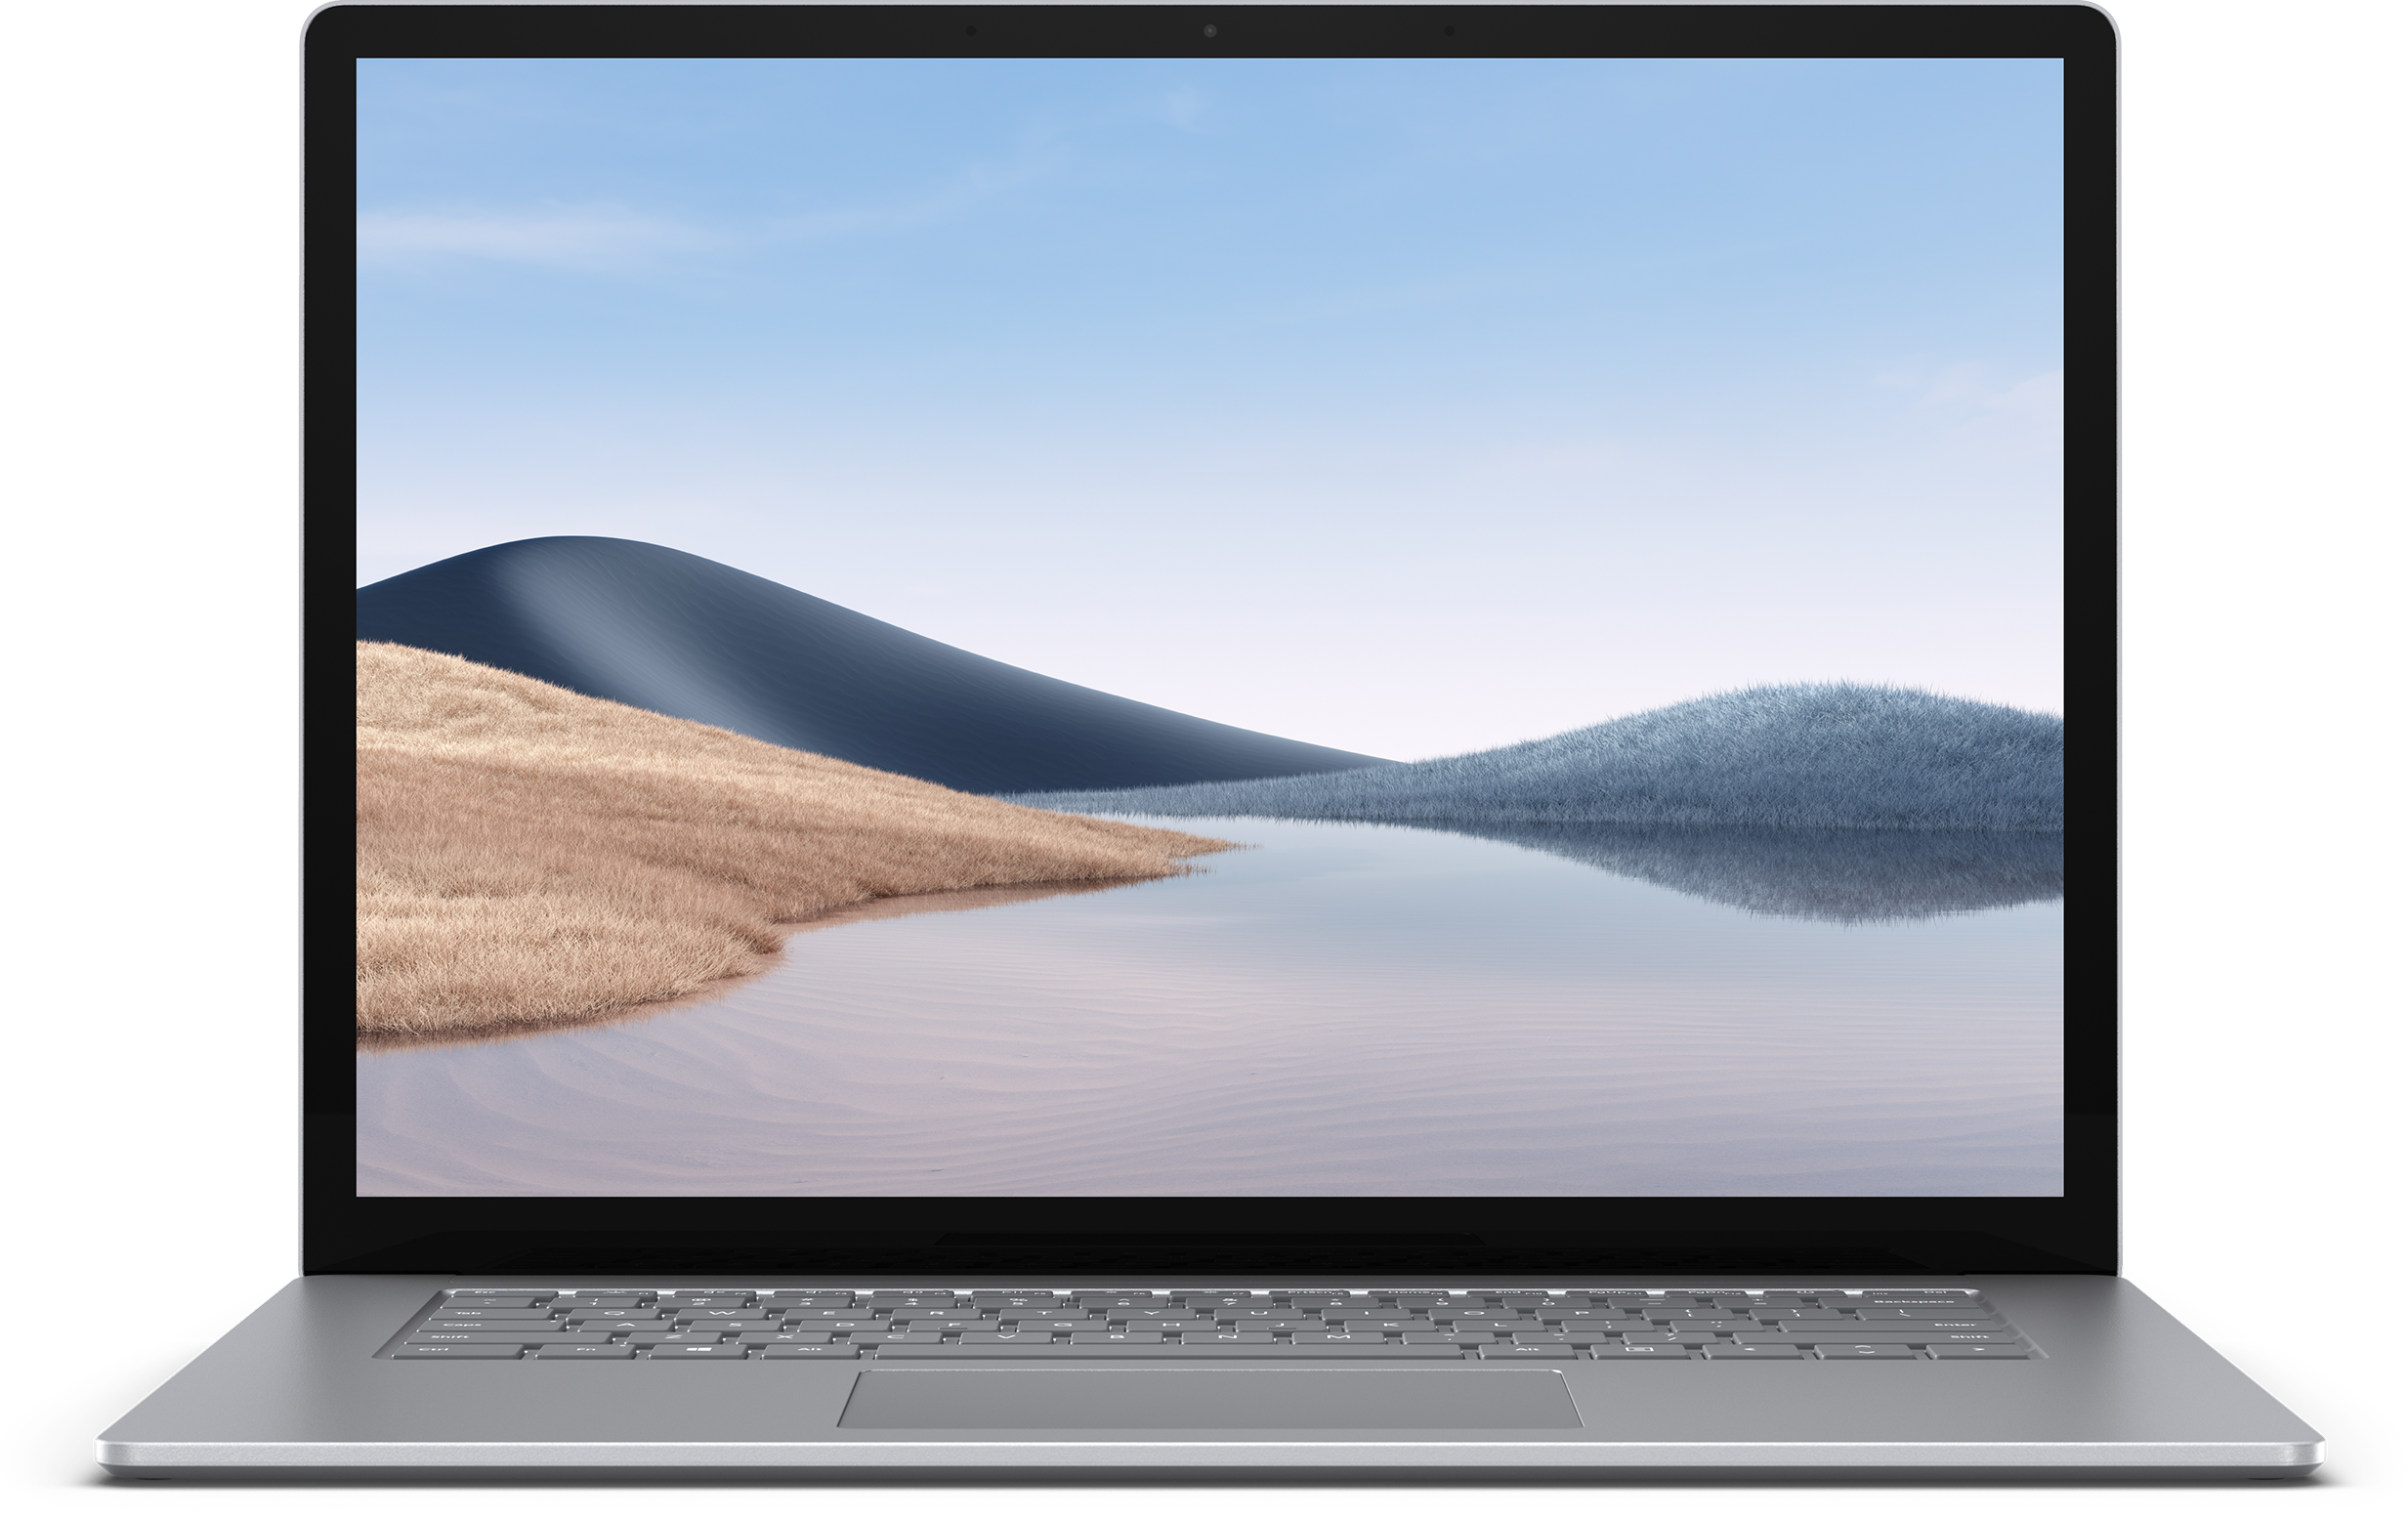 Microsoft Surface Laptop 4 - Intel Core i5 1145G7 - Win 10 Pro - Iris Xe Graphics - 16 GB RAM - 512 GB SSD - 13.5" pantalla táctil 2256 x 1504 - Wi-Fi 6 - platino - demostración, comercial - 5B4-00037